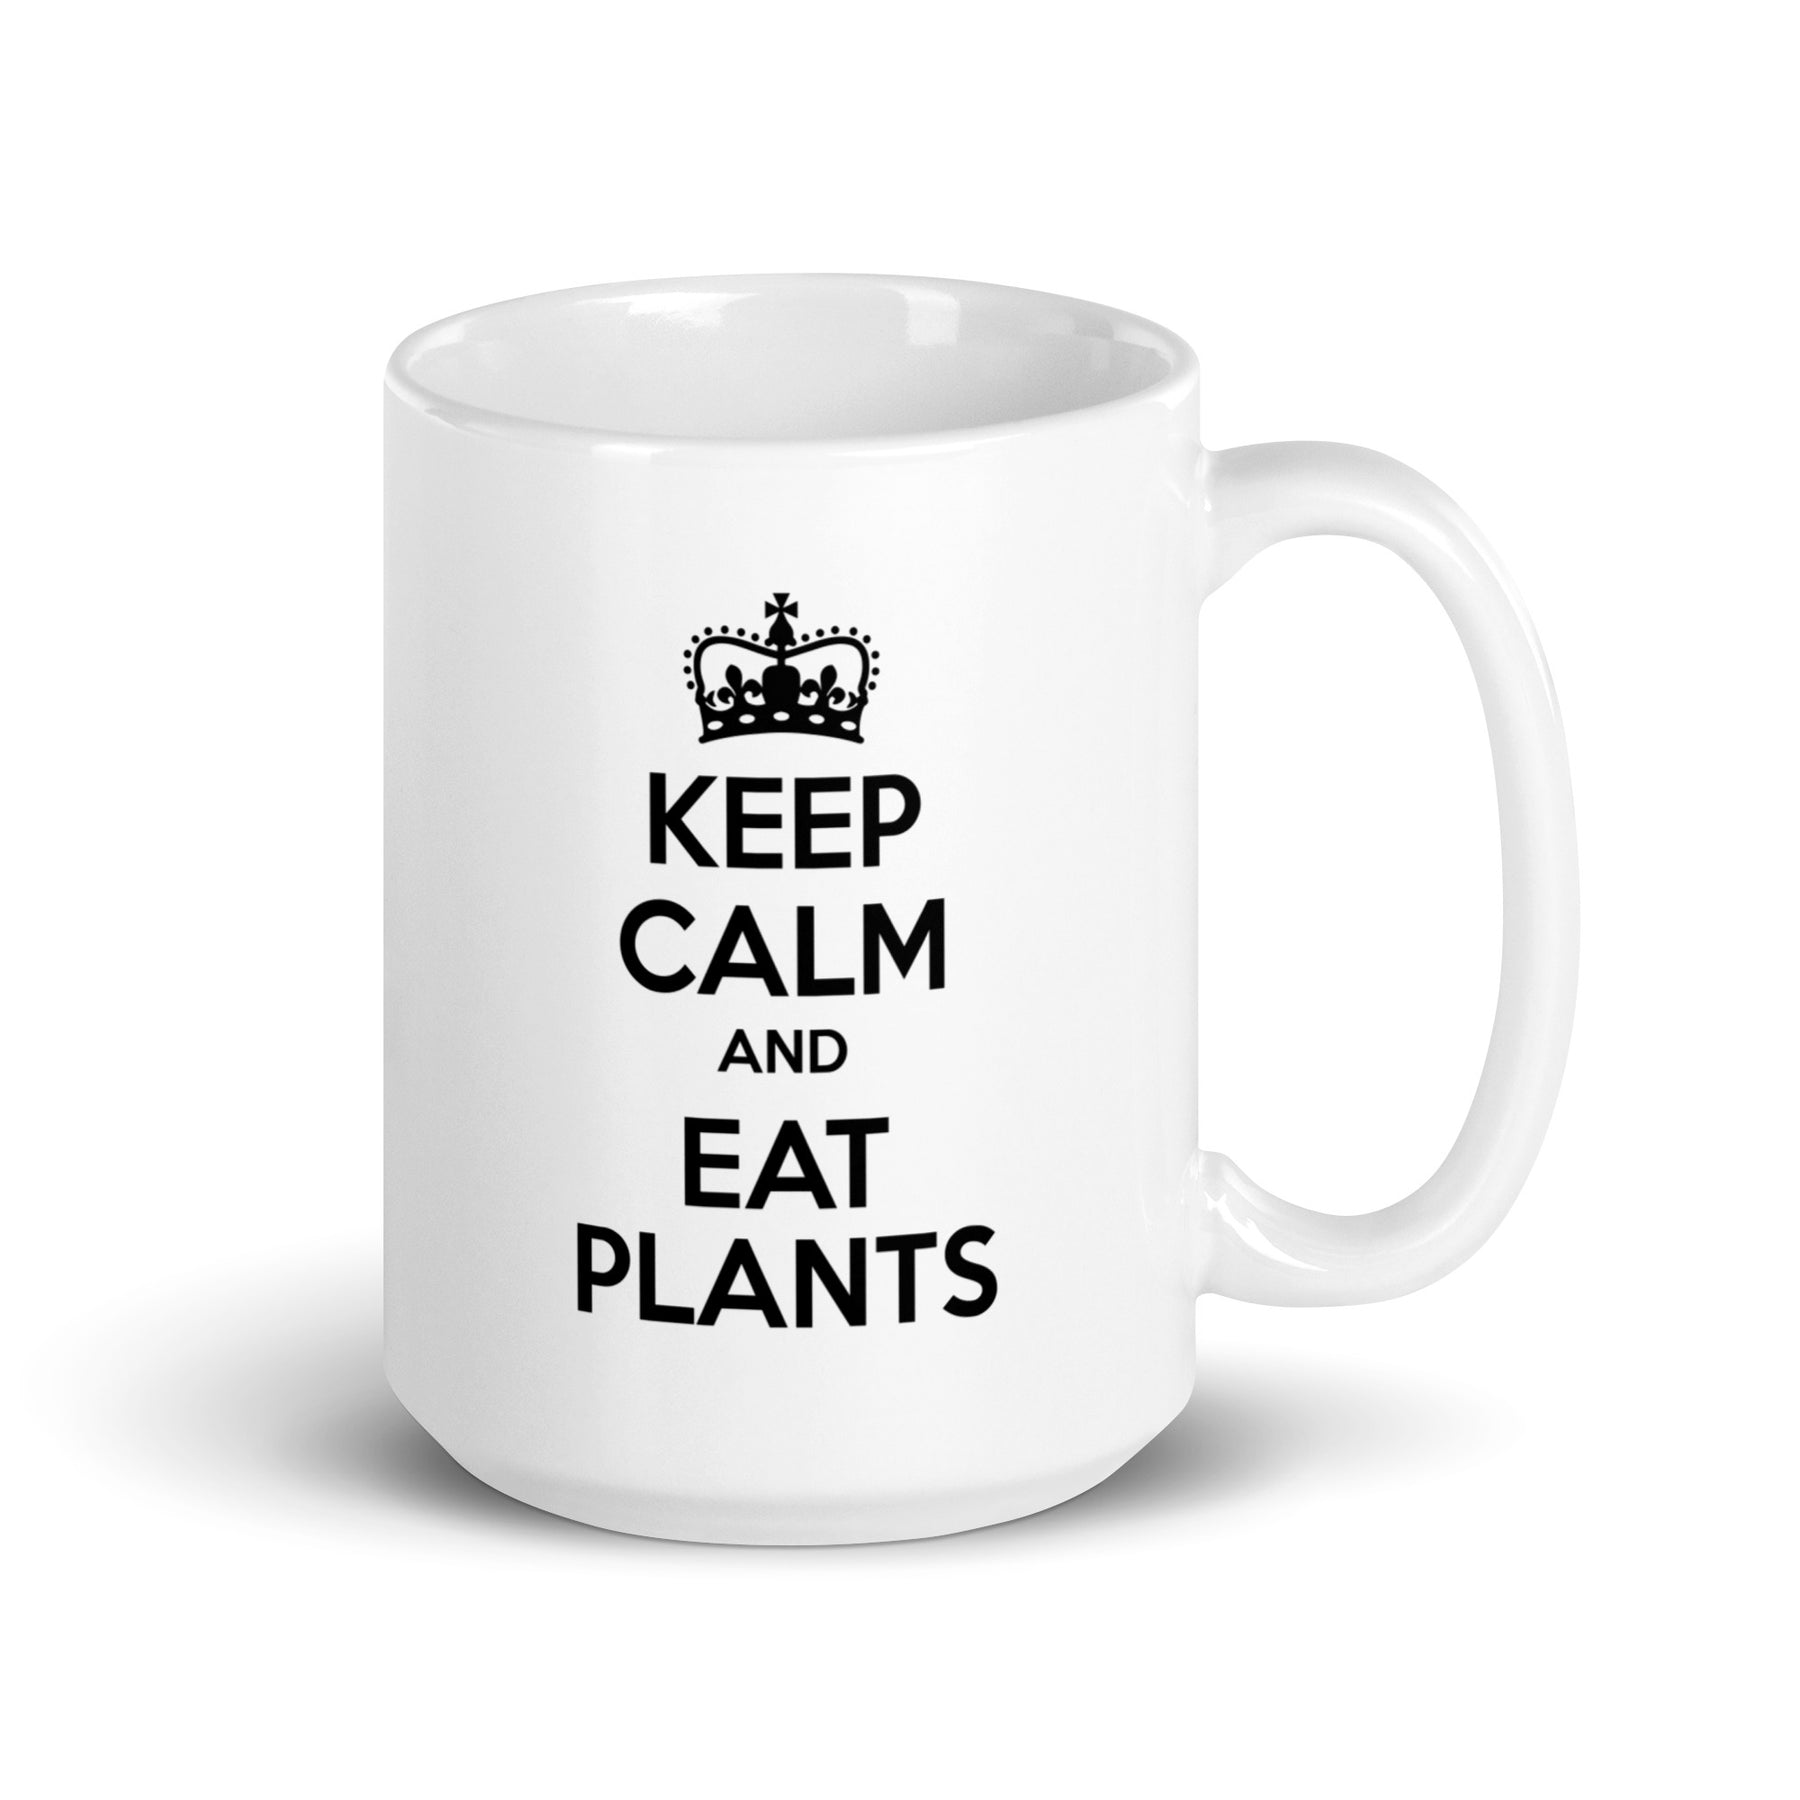 KEEP CALM EAT PLANTS White glossy mug